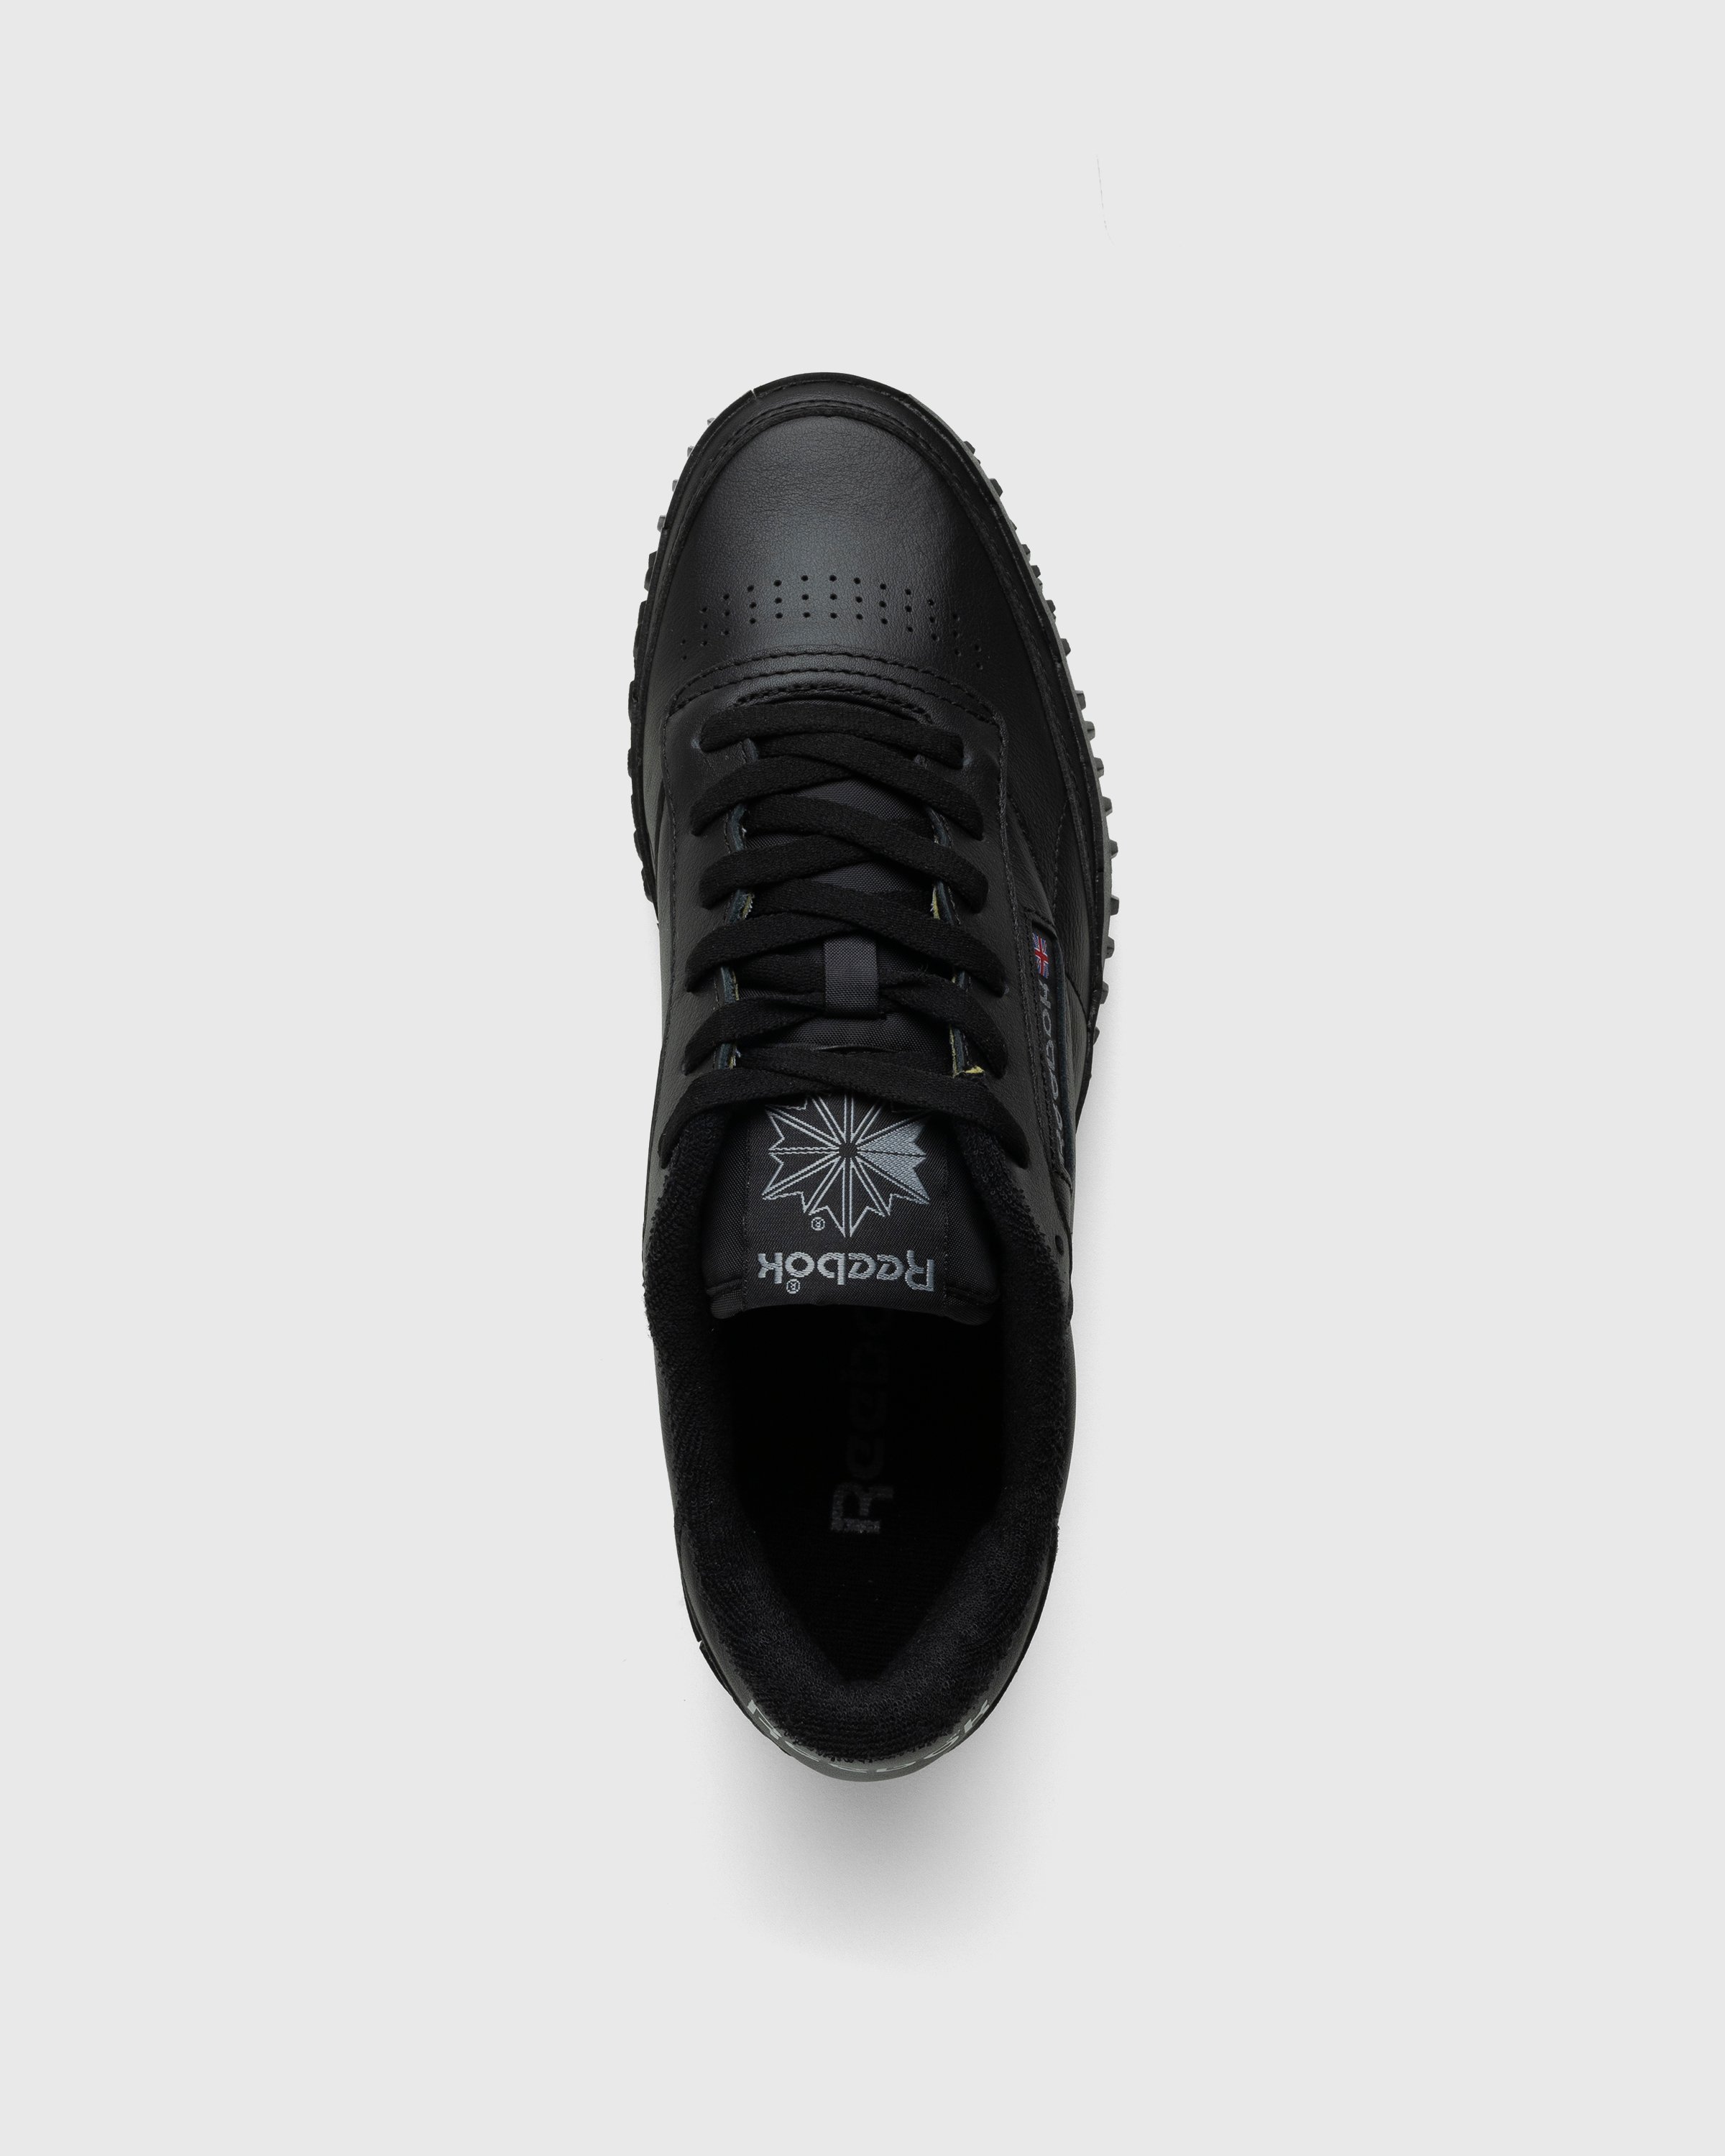 Reebok - Club C Vibram Black - Footwear - Black - Image 5